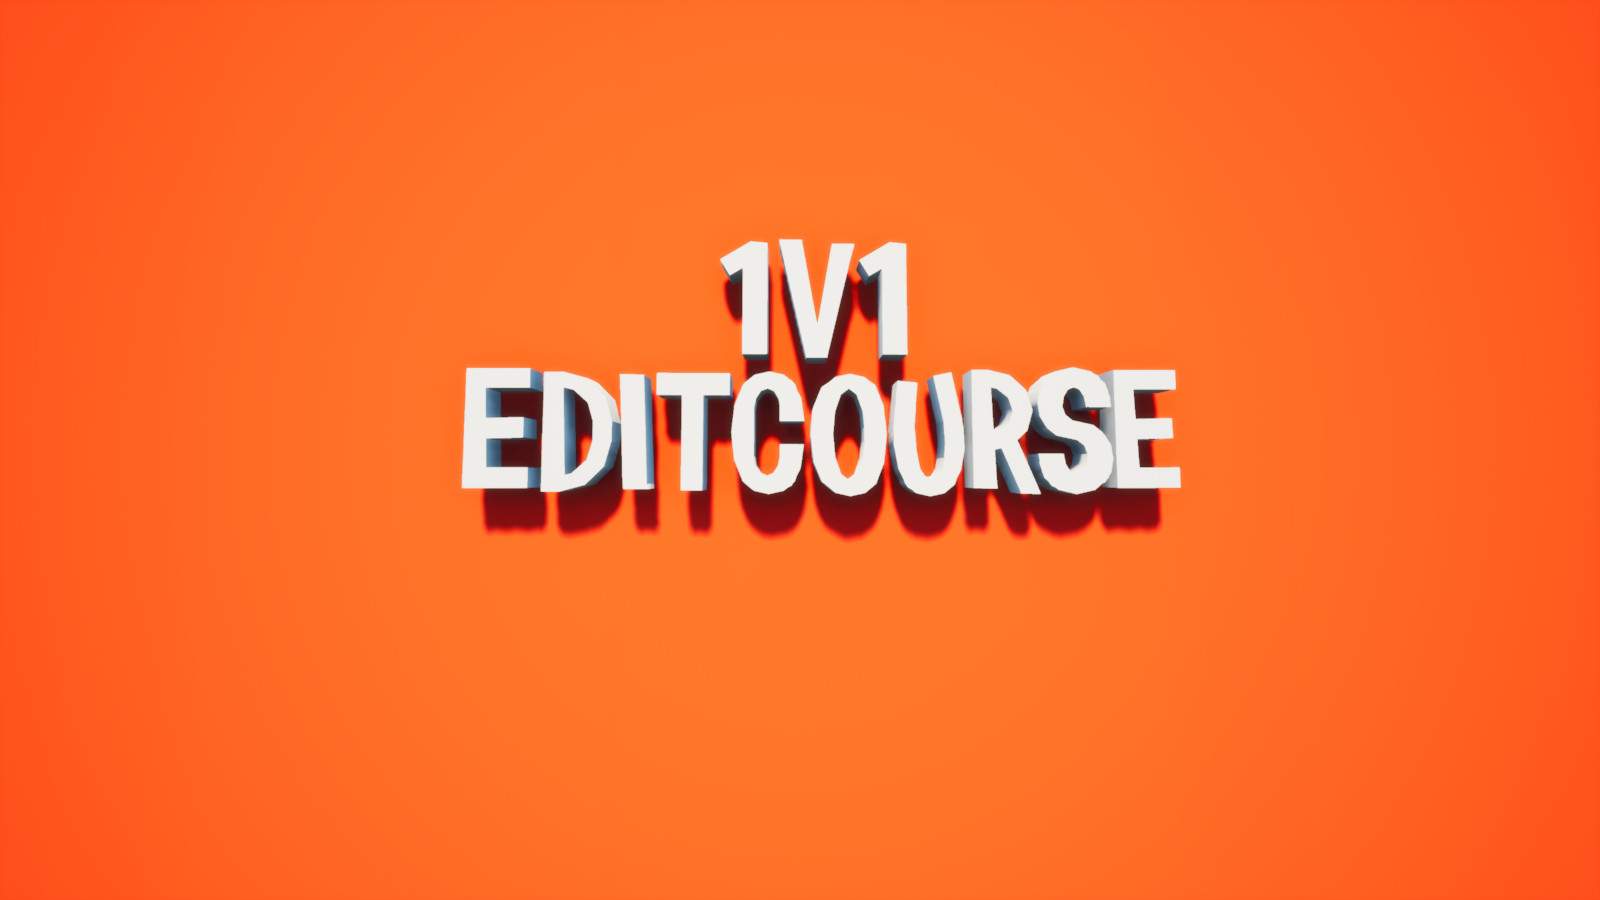 1v1 editing course code